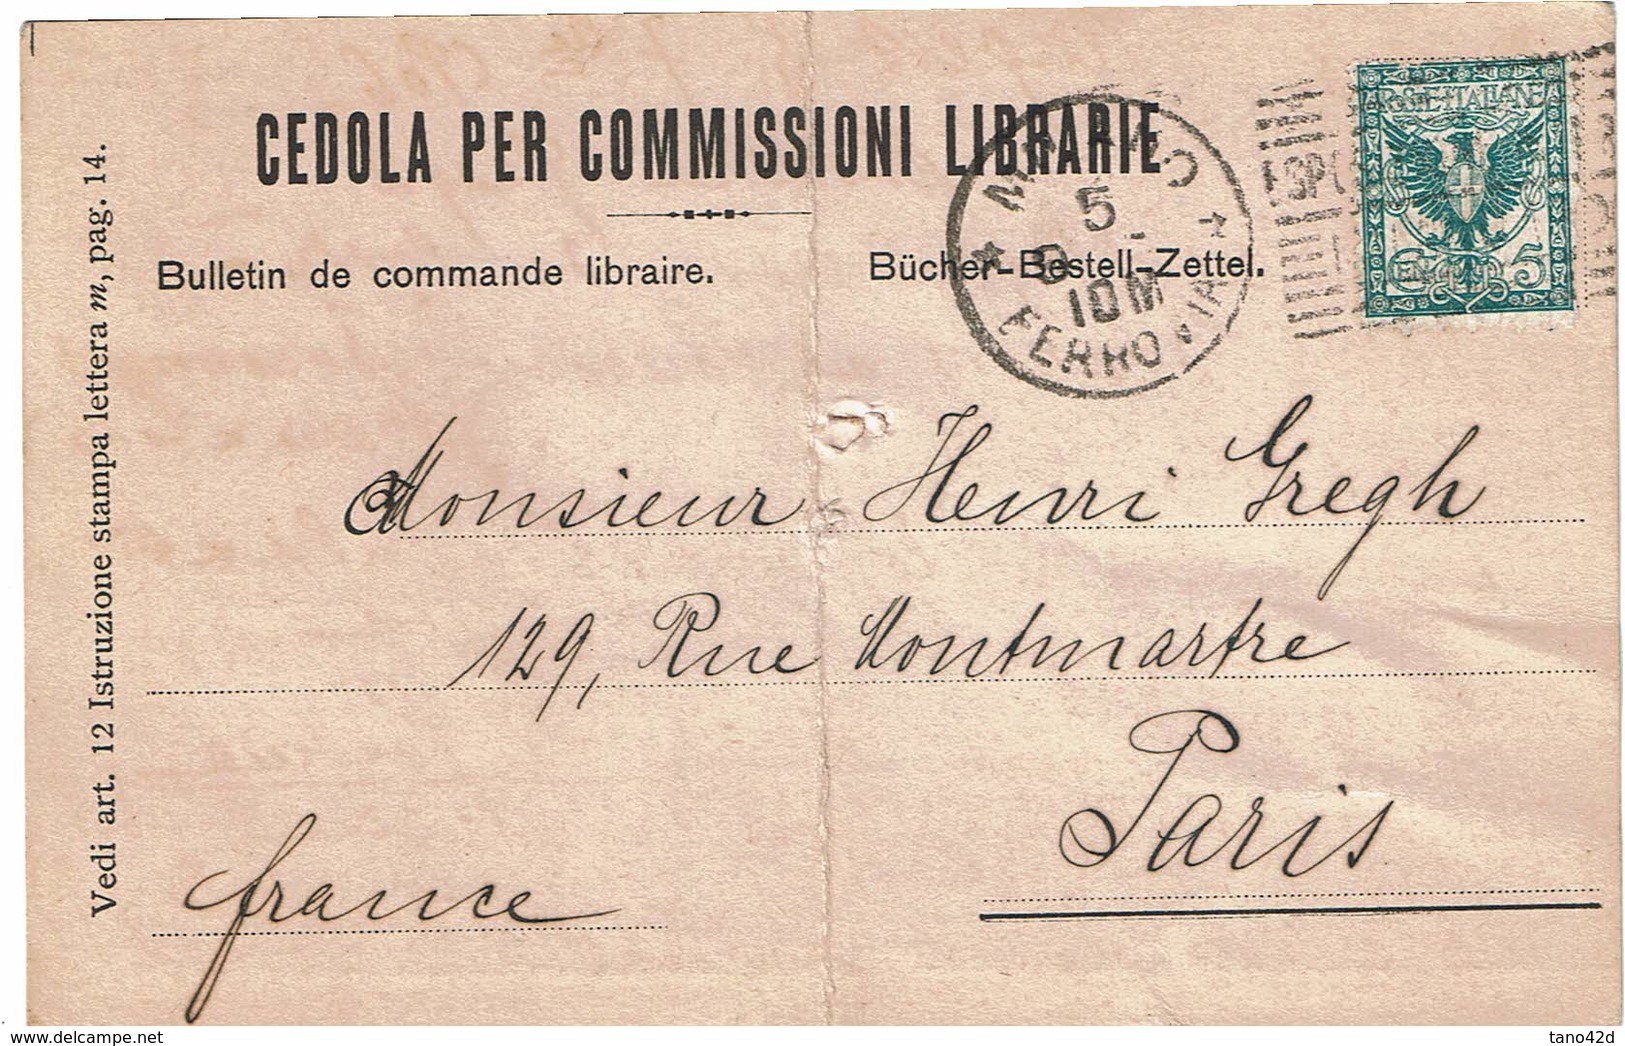 CHTD/V - ITALIE CEDOLA PER COMMISSIONI LIBRARIE SEPTEMBRE 1909 - Storia Postale